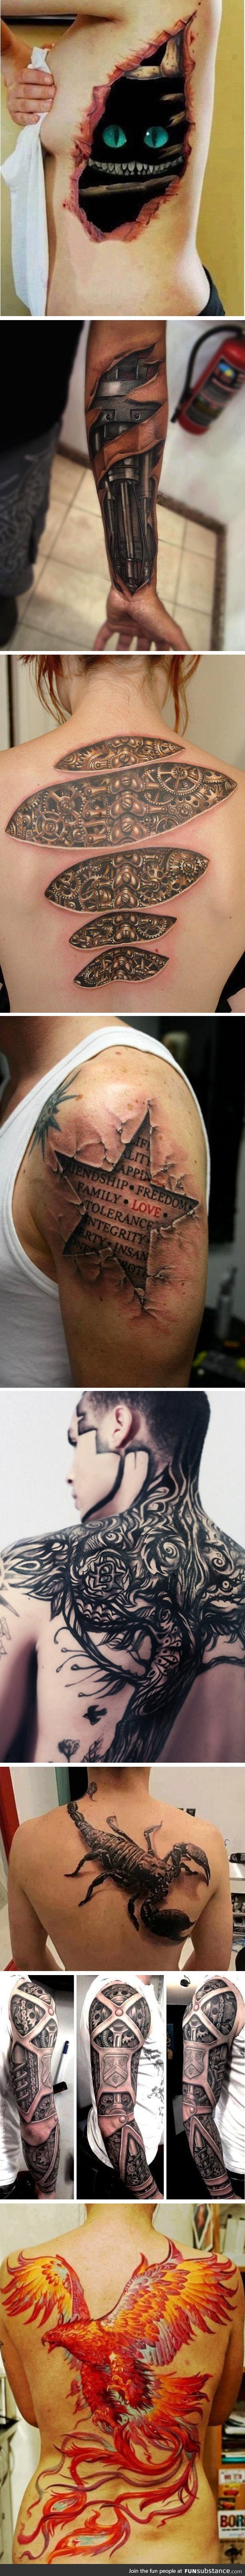 Some pretty cool Tattoos